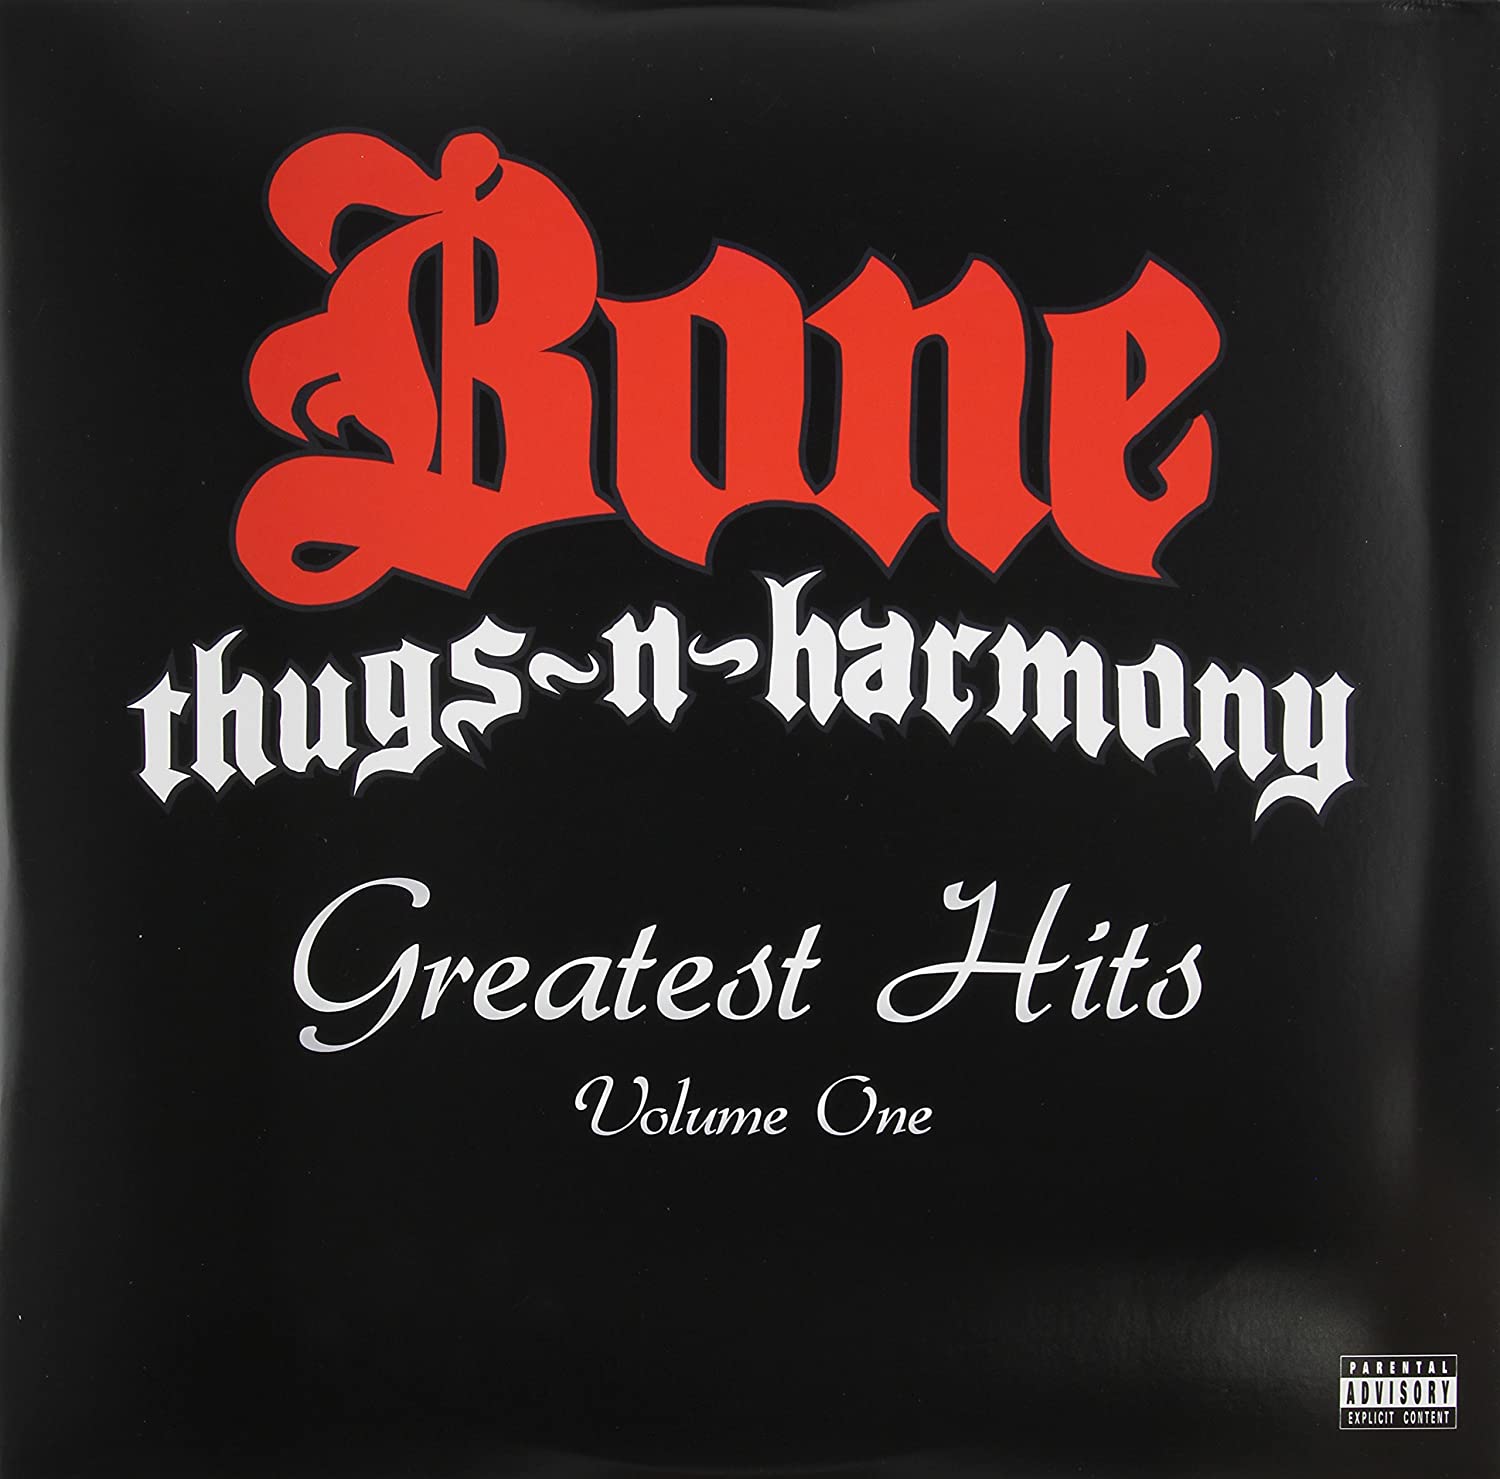 Bone Thugs-n-Harmony - Greatest Hits Volume One (Vinyl 2LP)